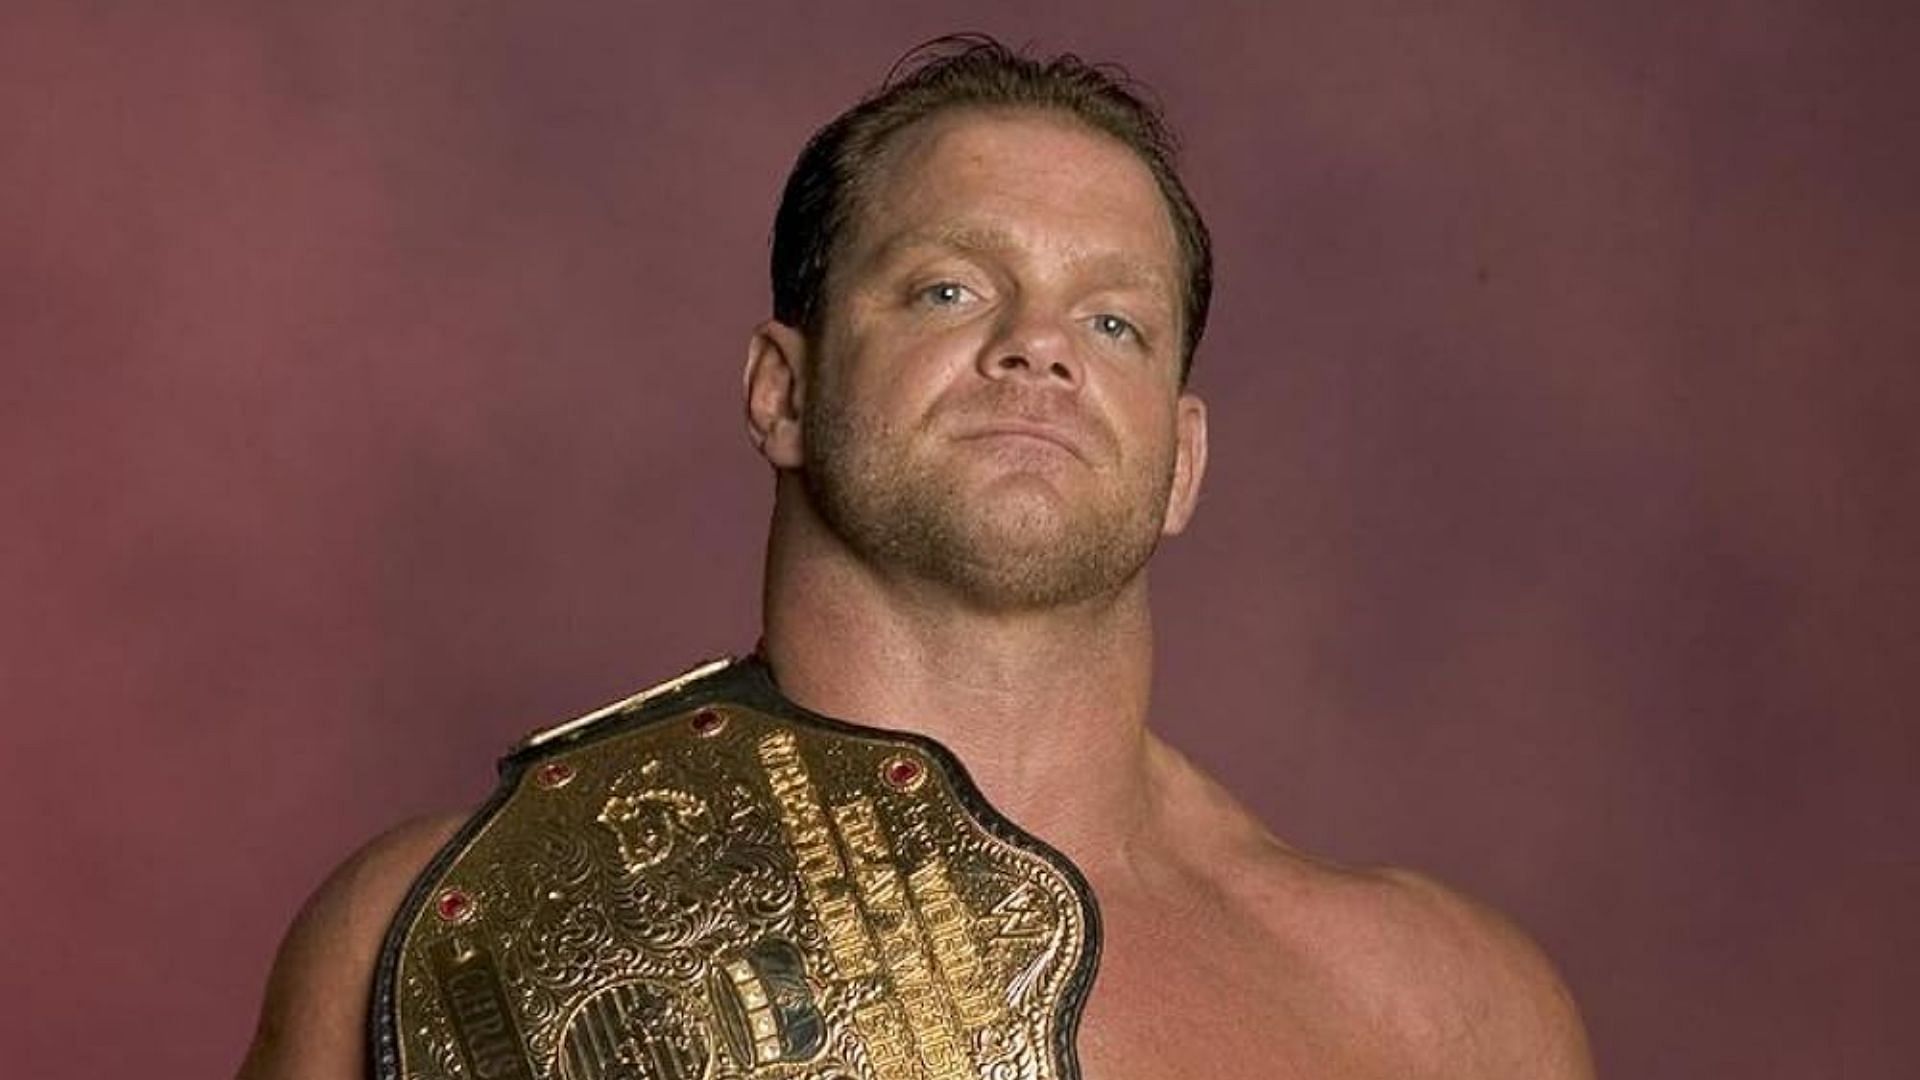 Former World Heavyweight Champion Chris Benoit